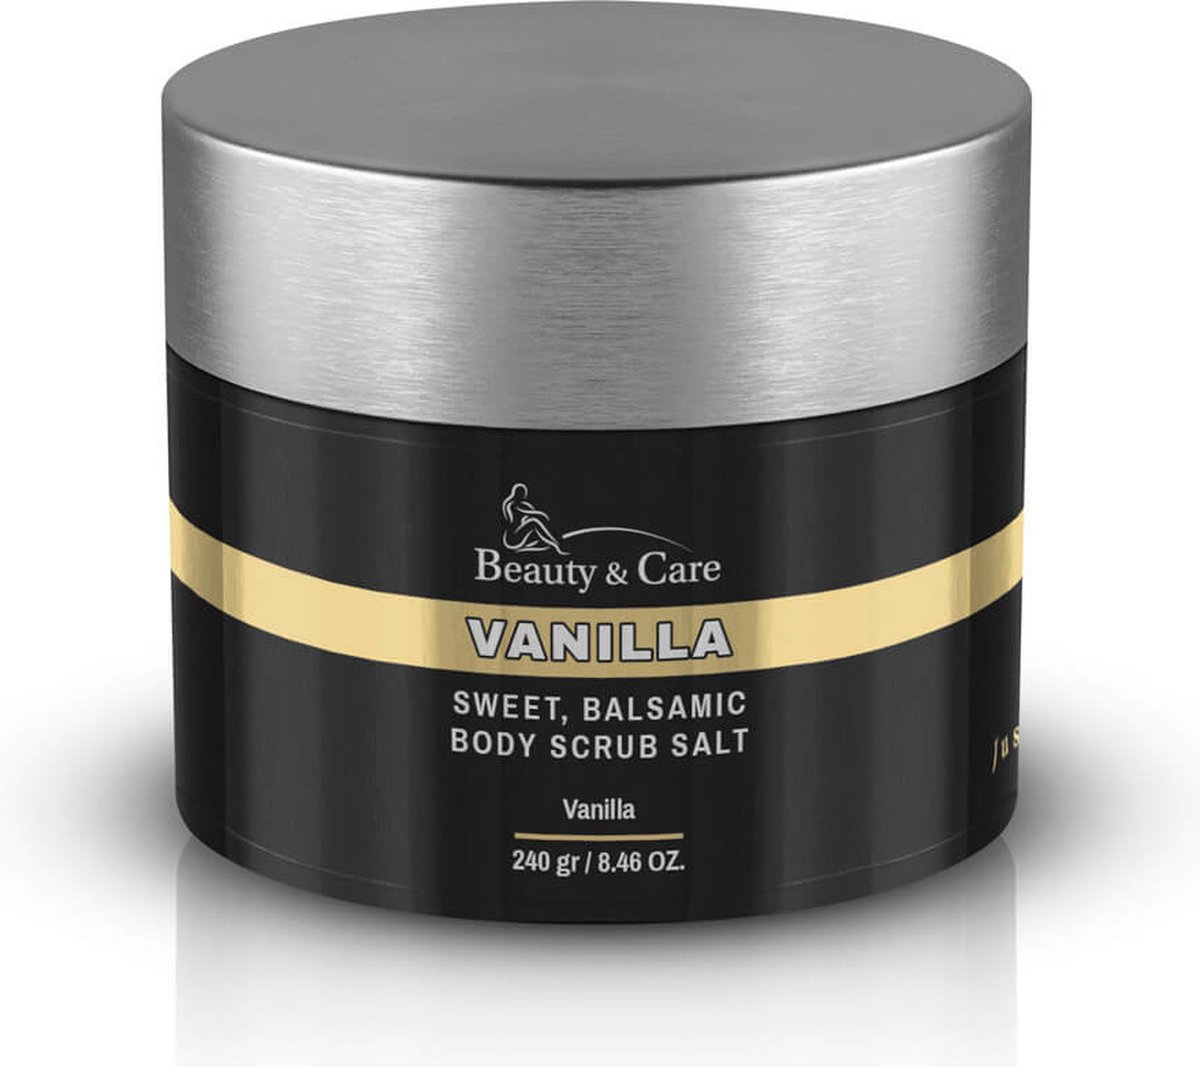 Beauty & Care - Vanilla Body Scrub Salt - 240 g. new